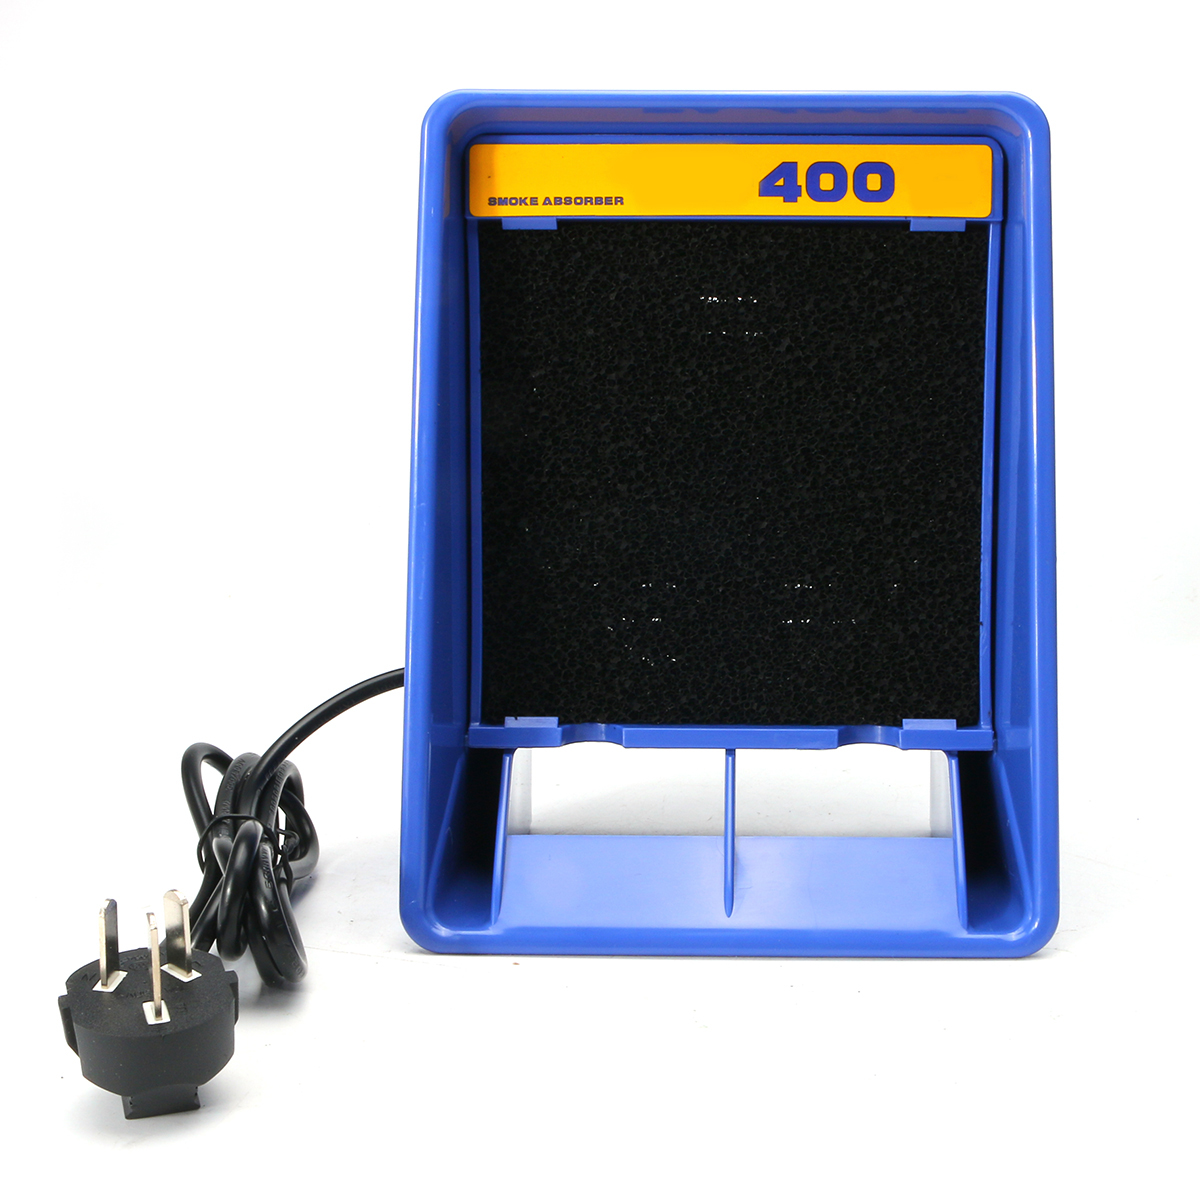 220V-Solder-Smoke-Absorber-Remover-Fume-Extractor-Air-Filter-Fan-For-Soldering-1234180-4